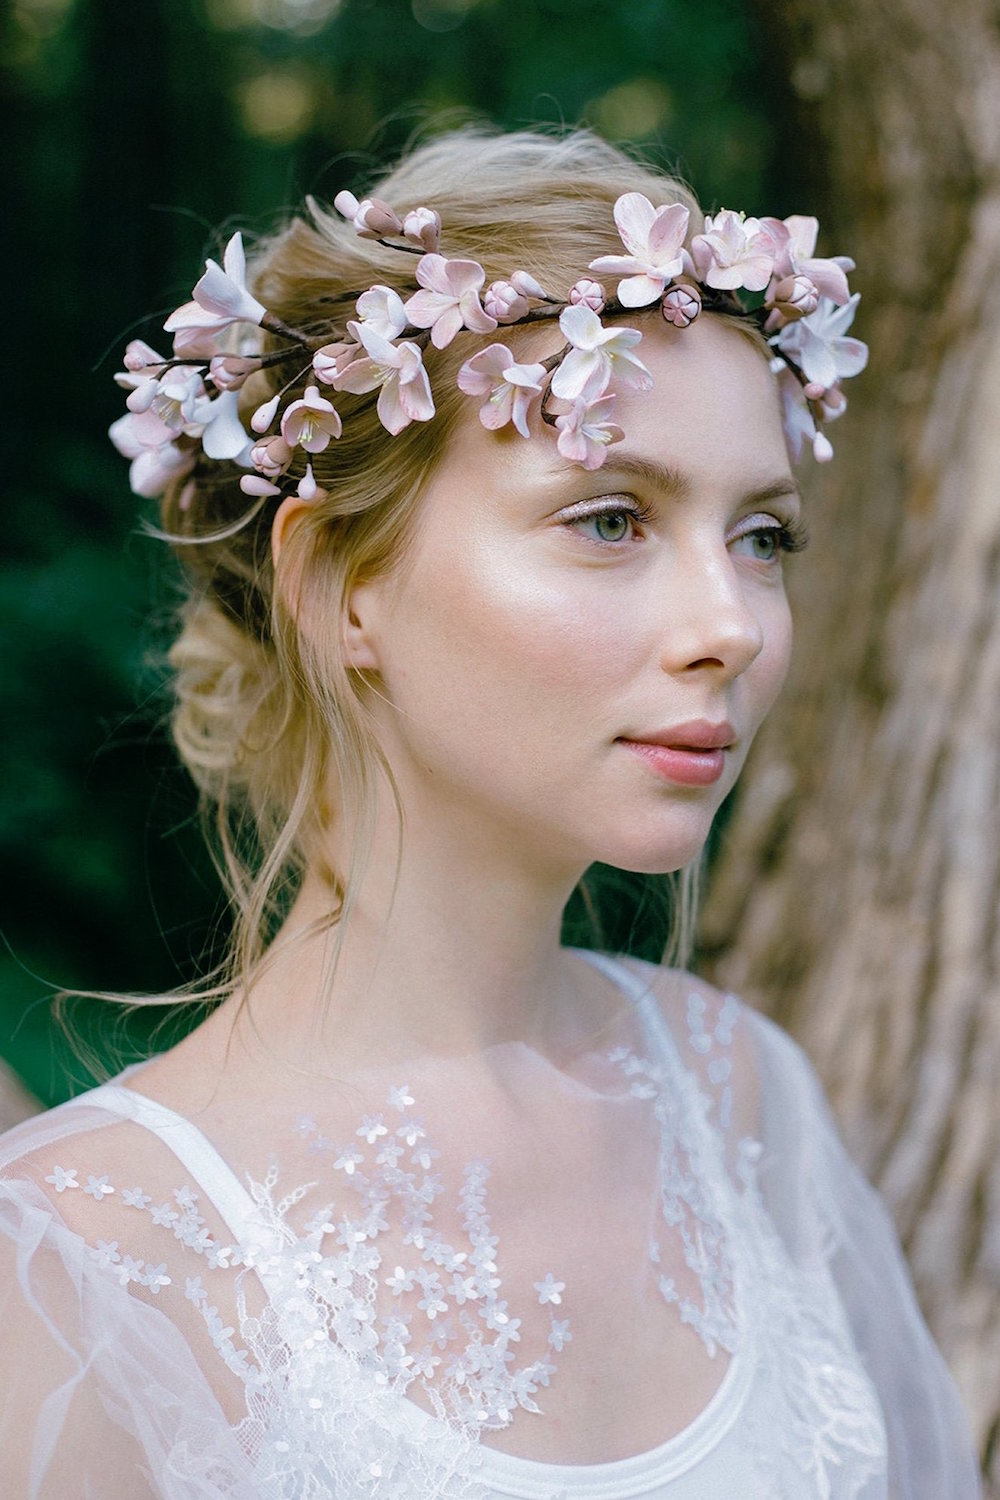 Flower Crown and Veil, Weddings, Hair and Makeup